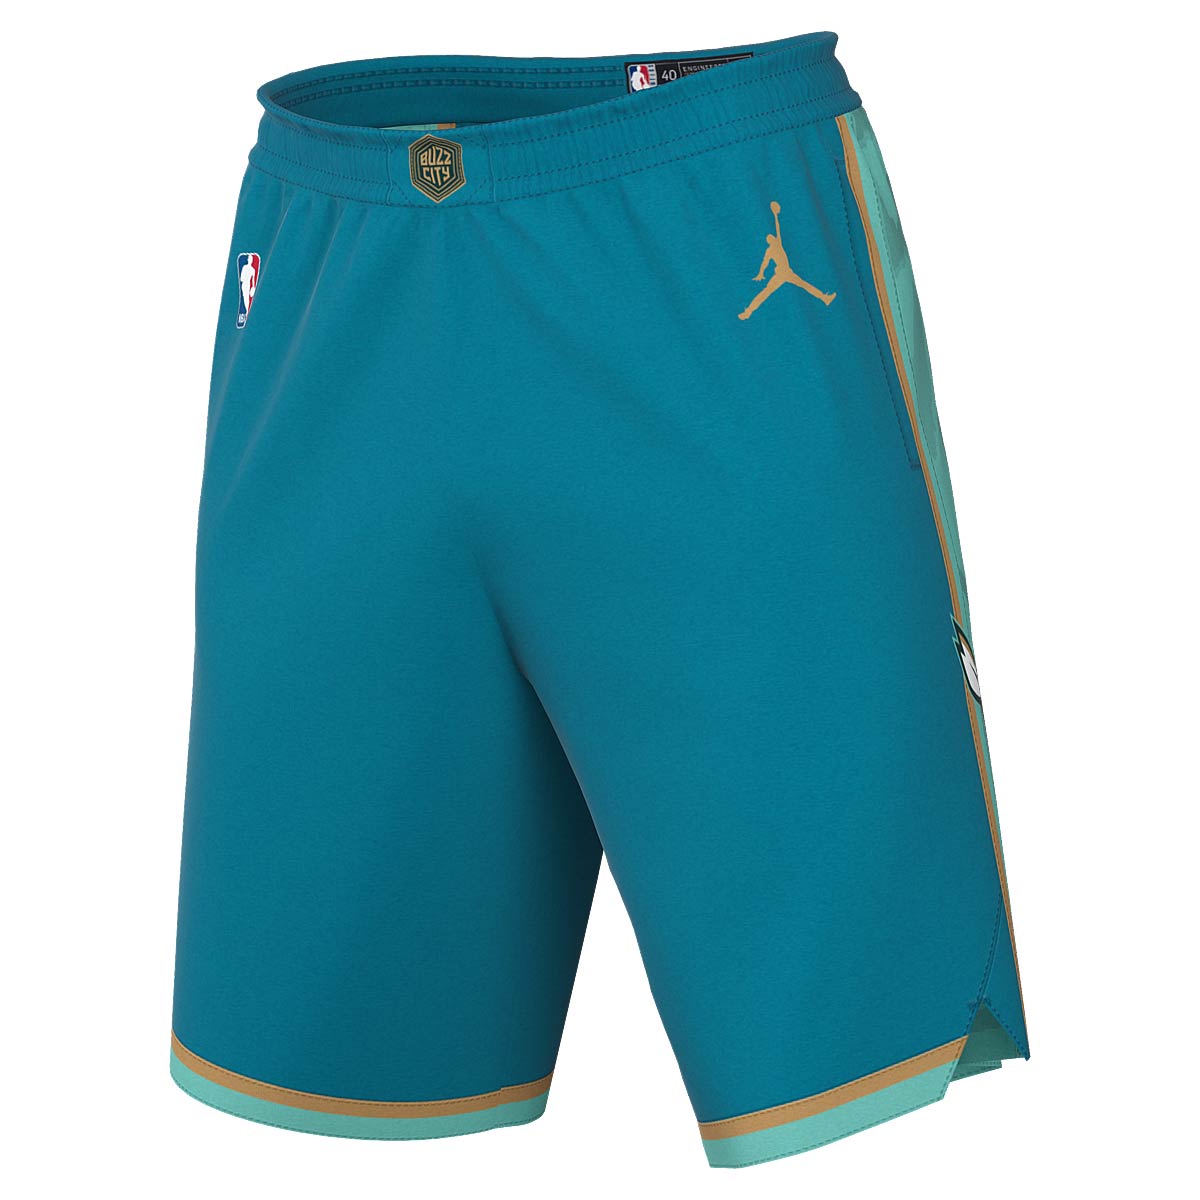 Jordan NBA Charlotte Hornets City Edition Swingman Shorts, Rapid Teal/schwarz/schwarz L